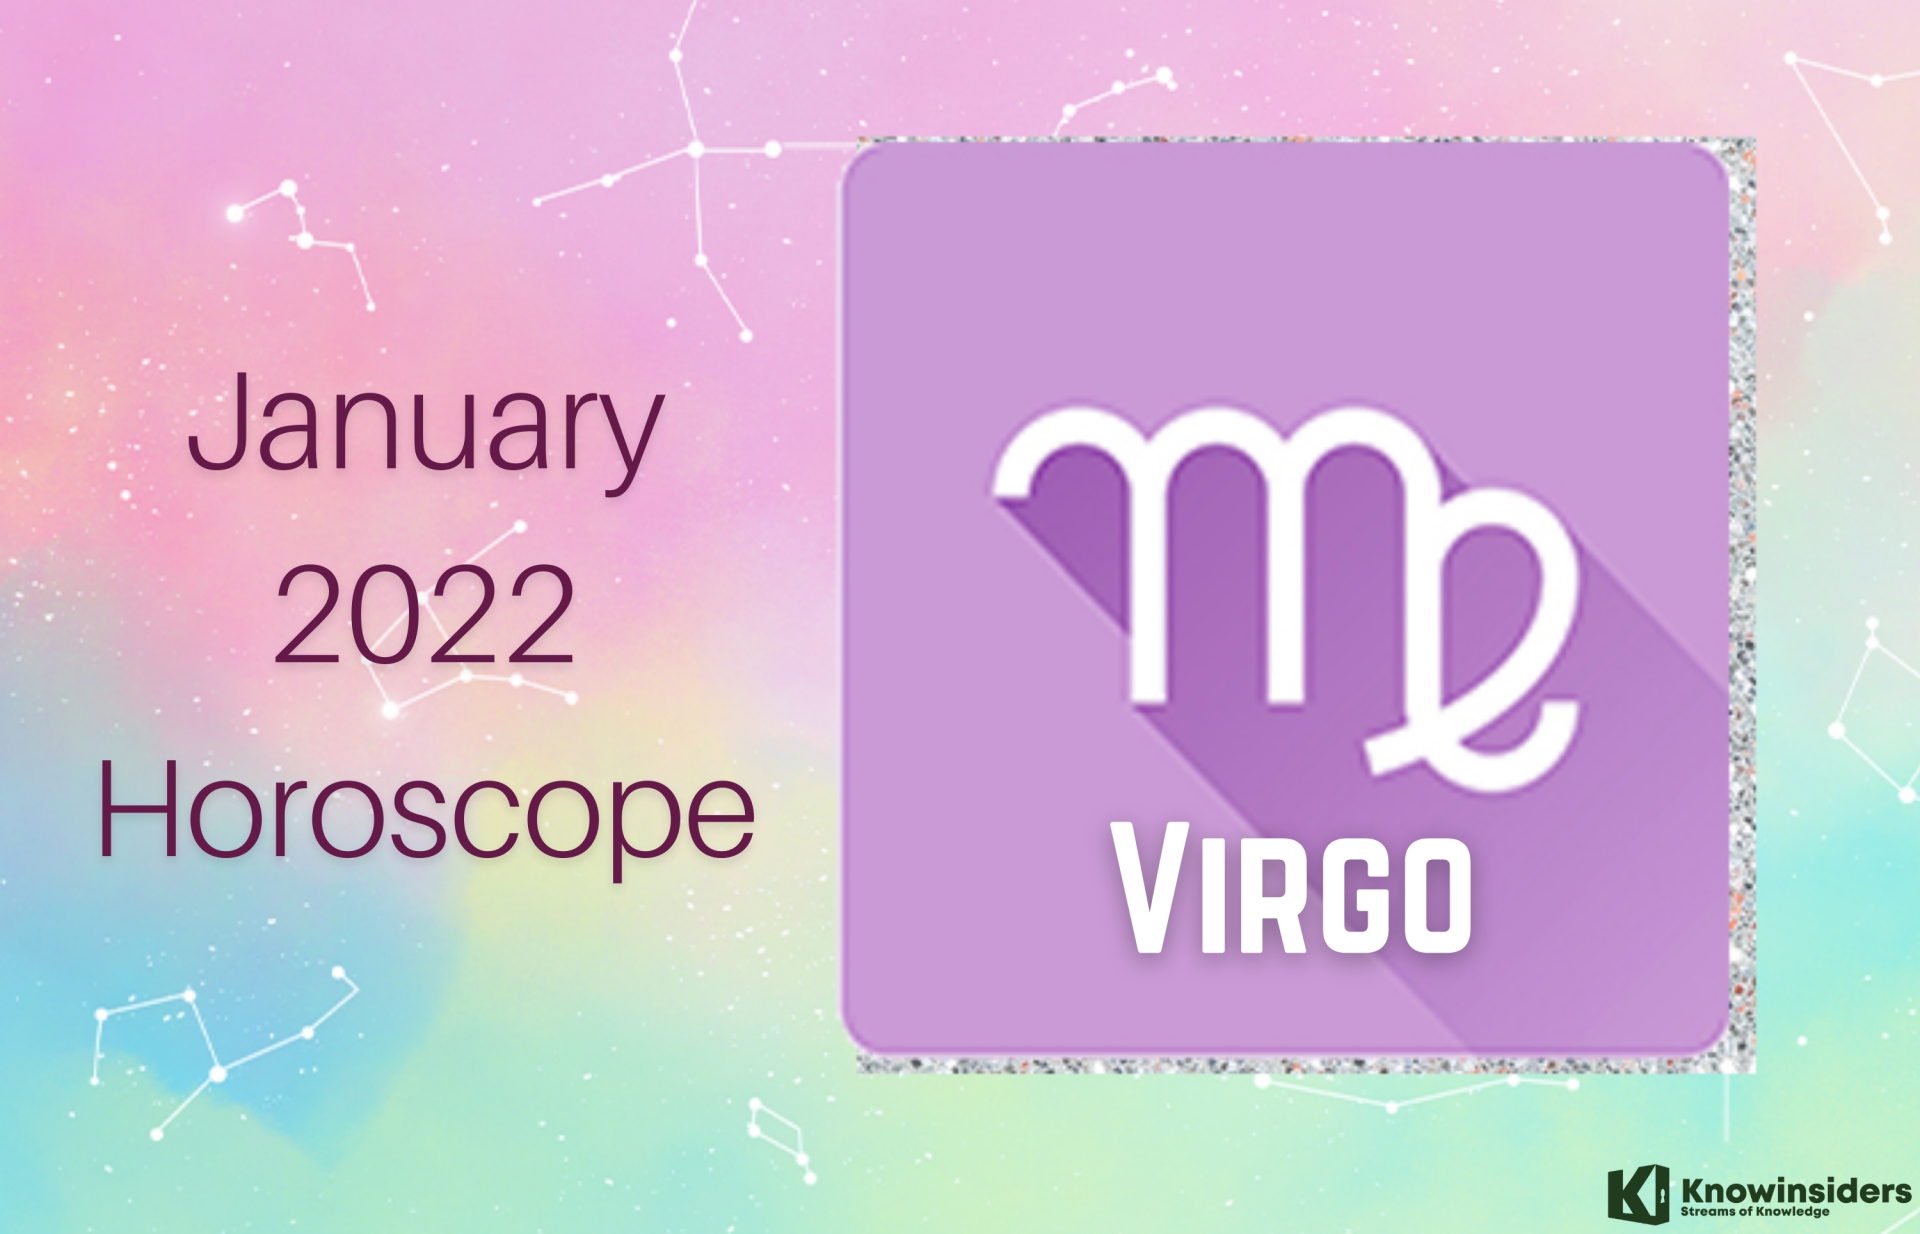 VIRGO January 2022 Horoscope: Monthly Prediction for Love, Career, Money and Health